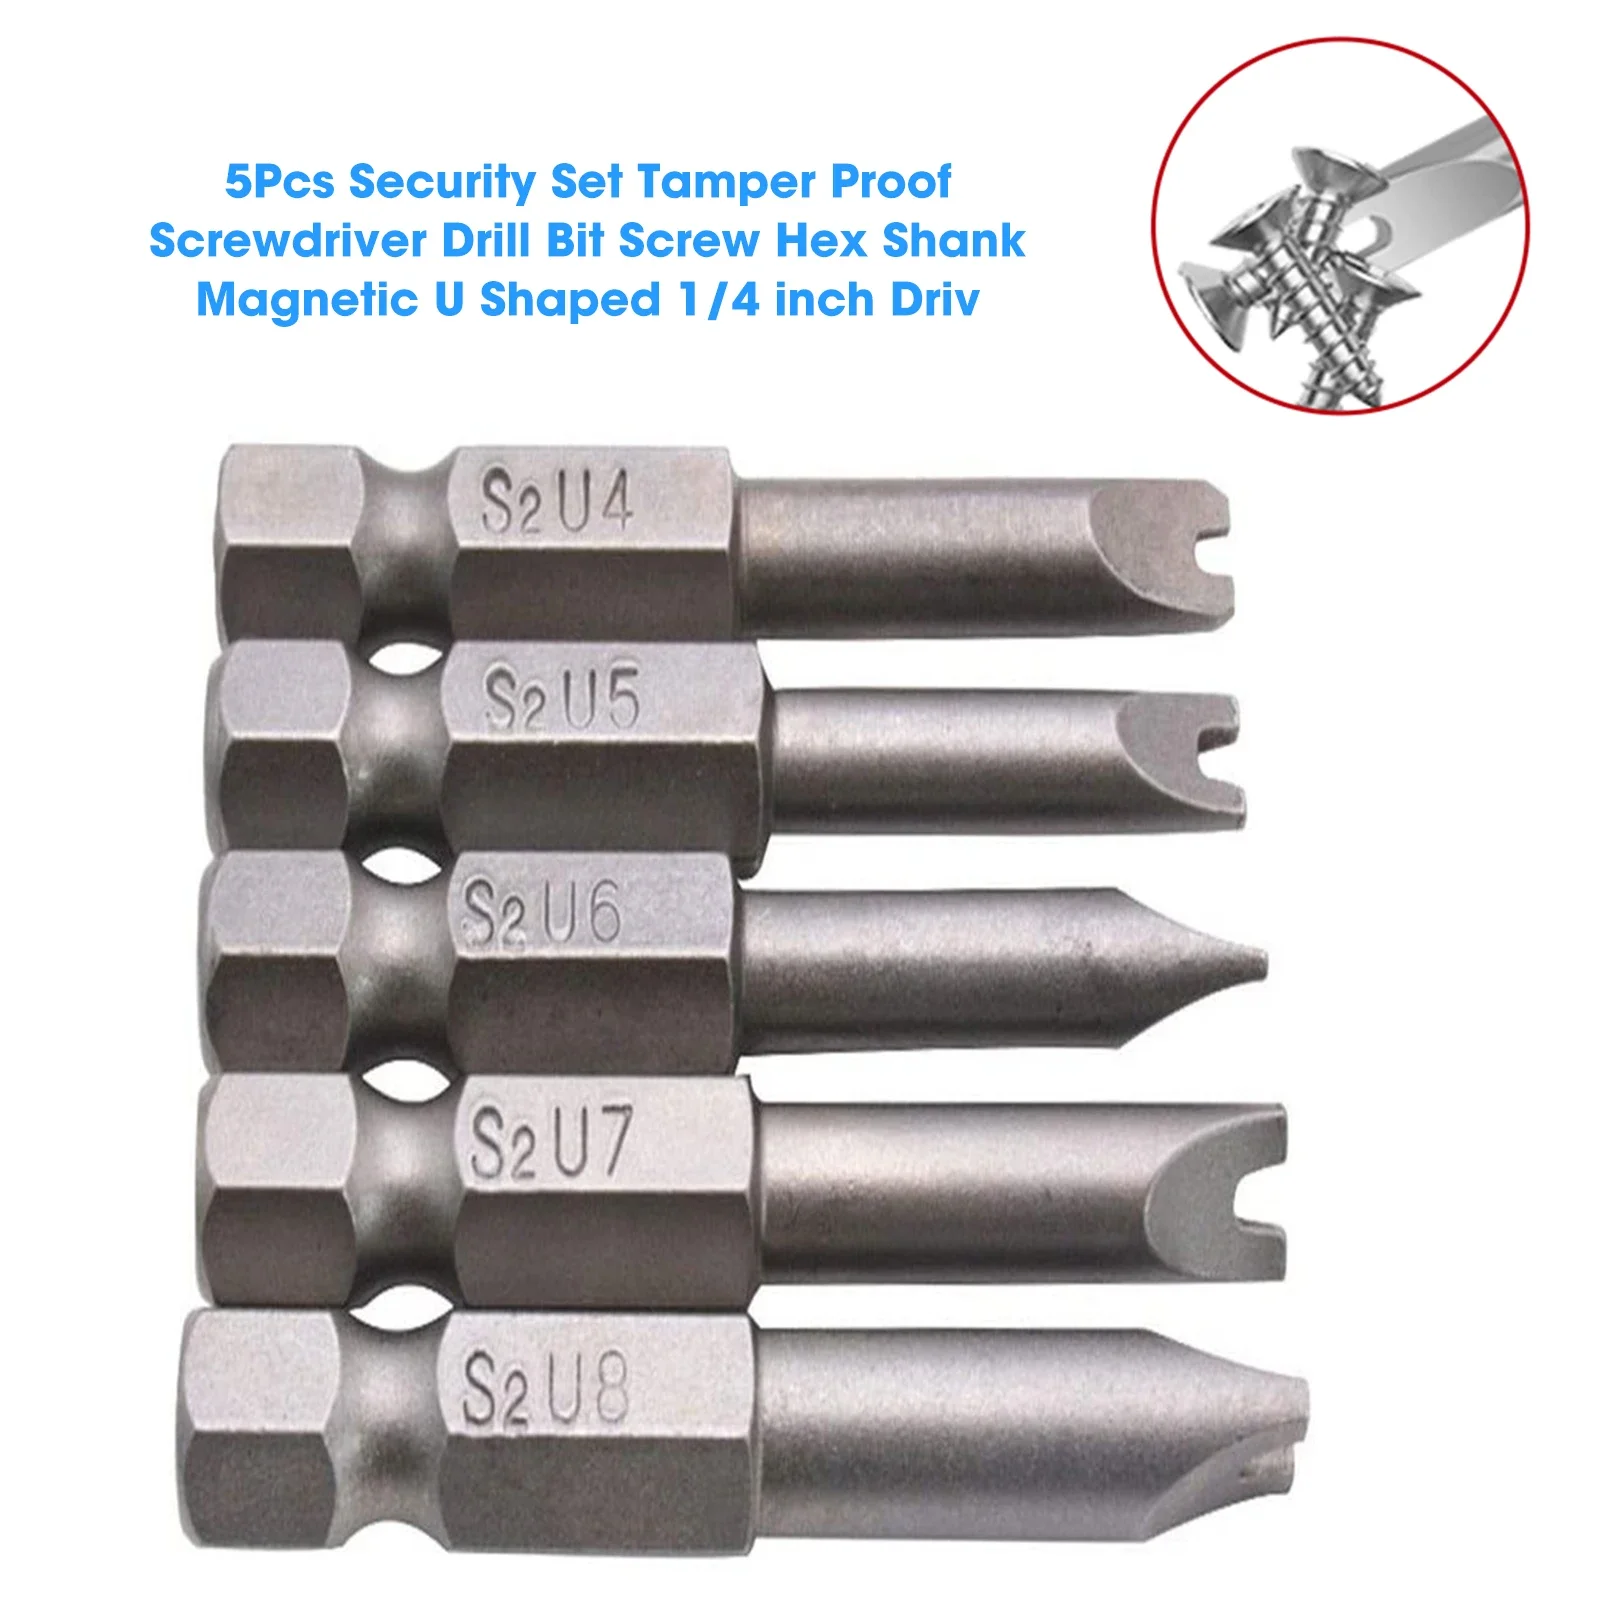 

5Pcs Security Set Tamper Proof Screwdriver Drill Bit Screw Hex Shank Magnetic U Shaped 1/4 inch Driv